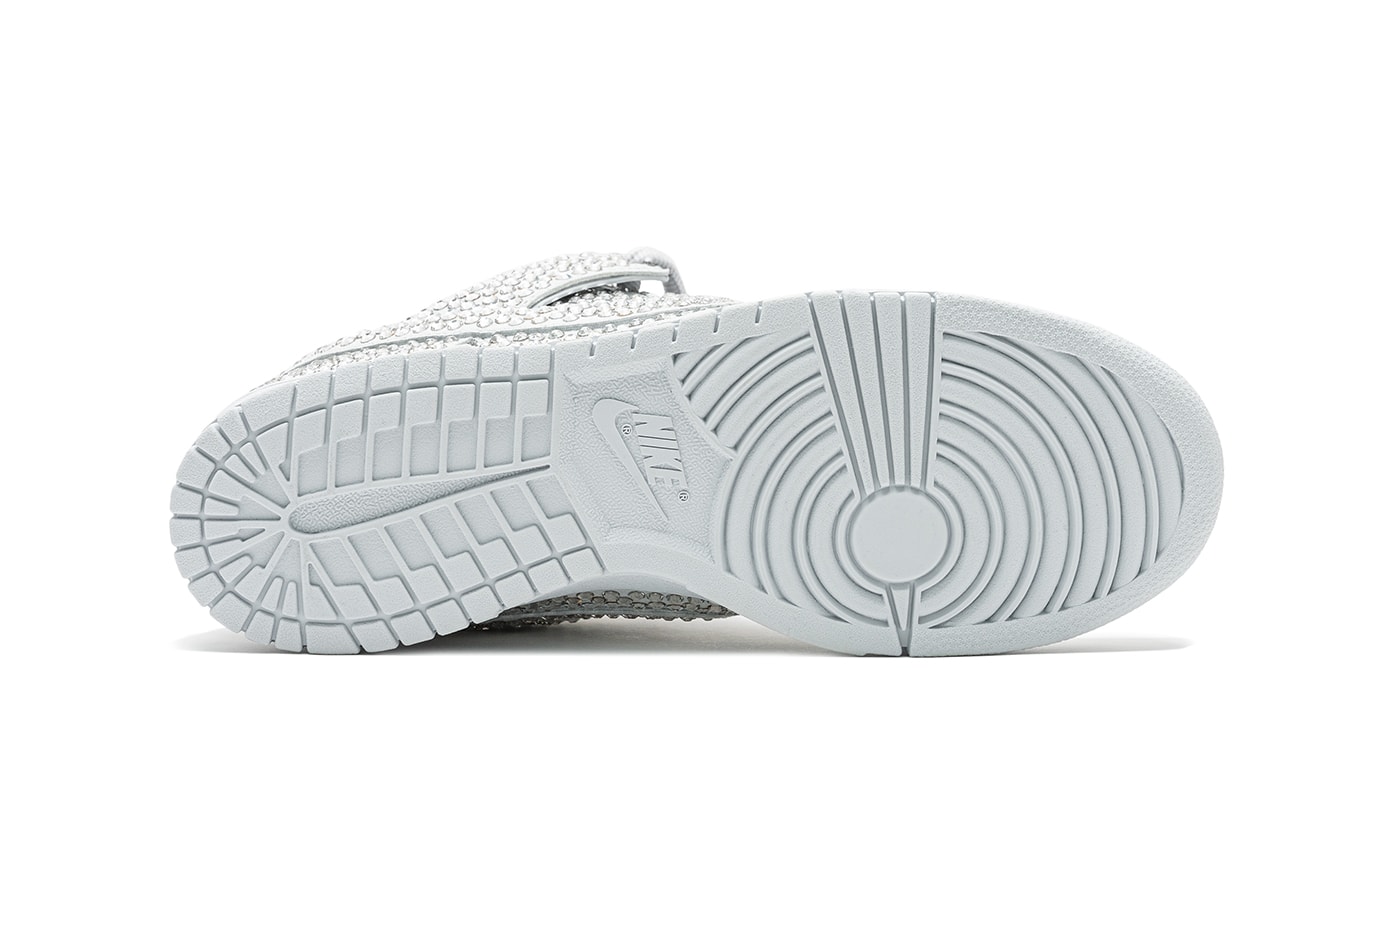 Cactus Plant Flea Market x Nike Dunk Low Lookbook shoes kicks sneakers Footwear trainers Cynthia Lu CPFM